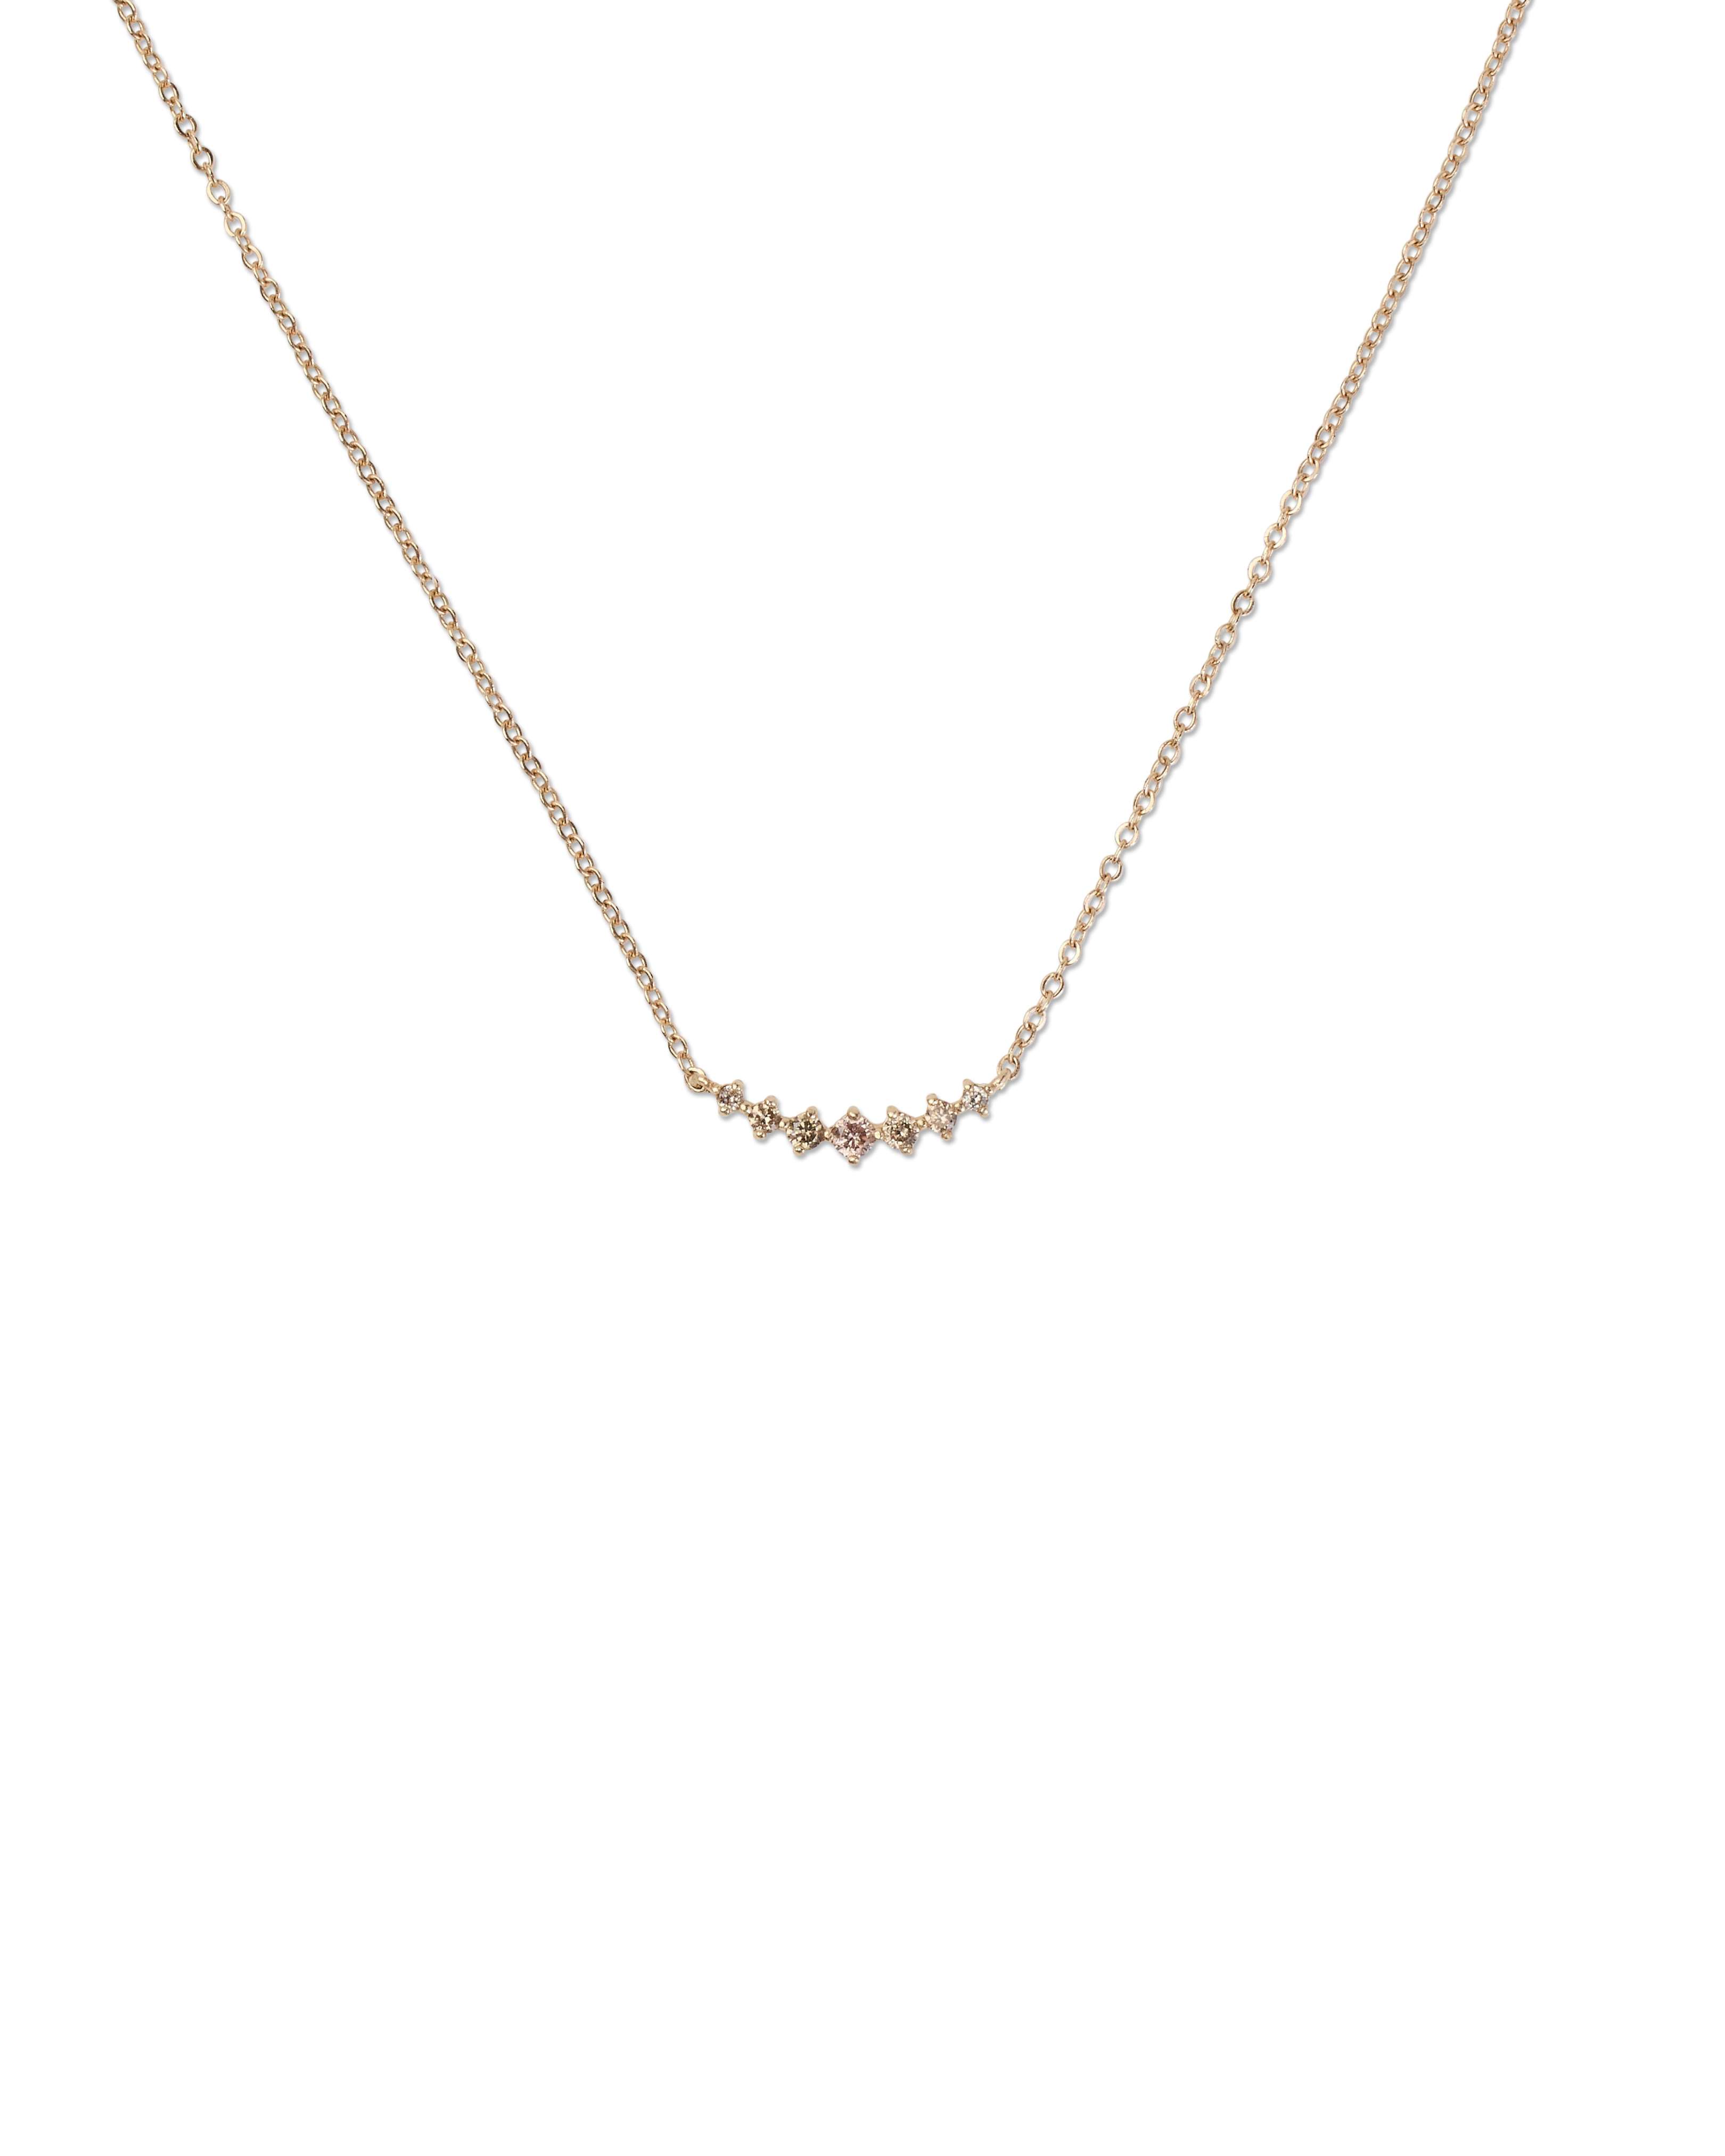 The Grace Diamond Cluster Necklace